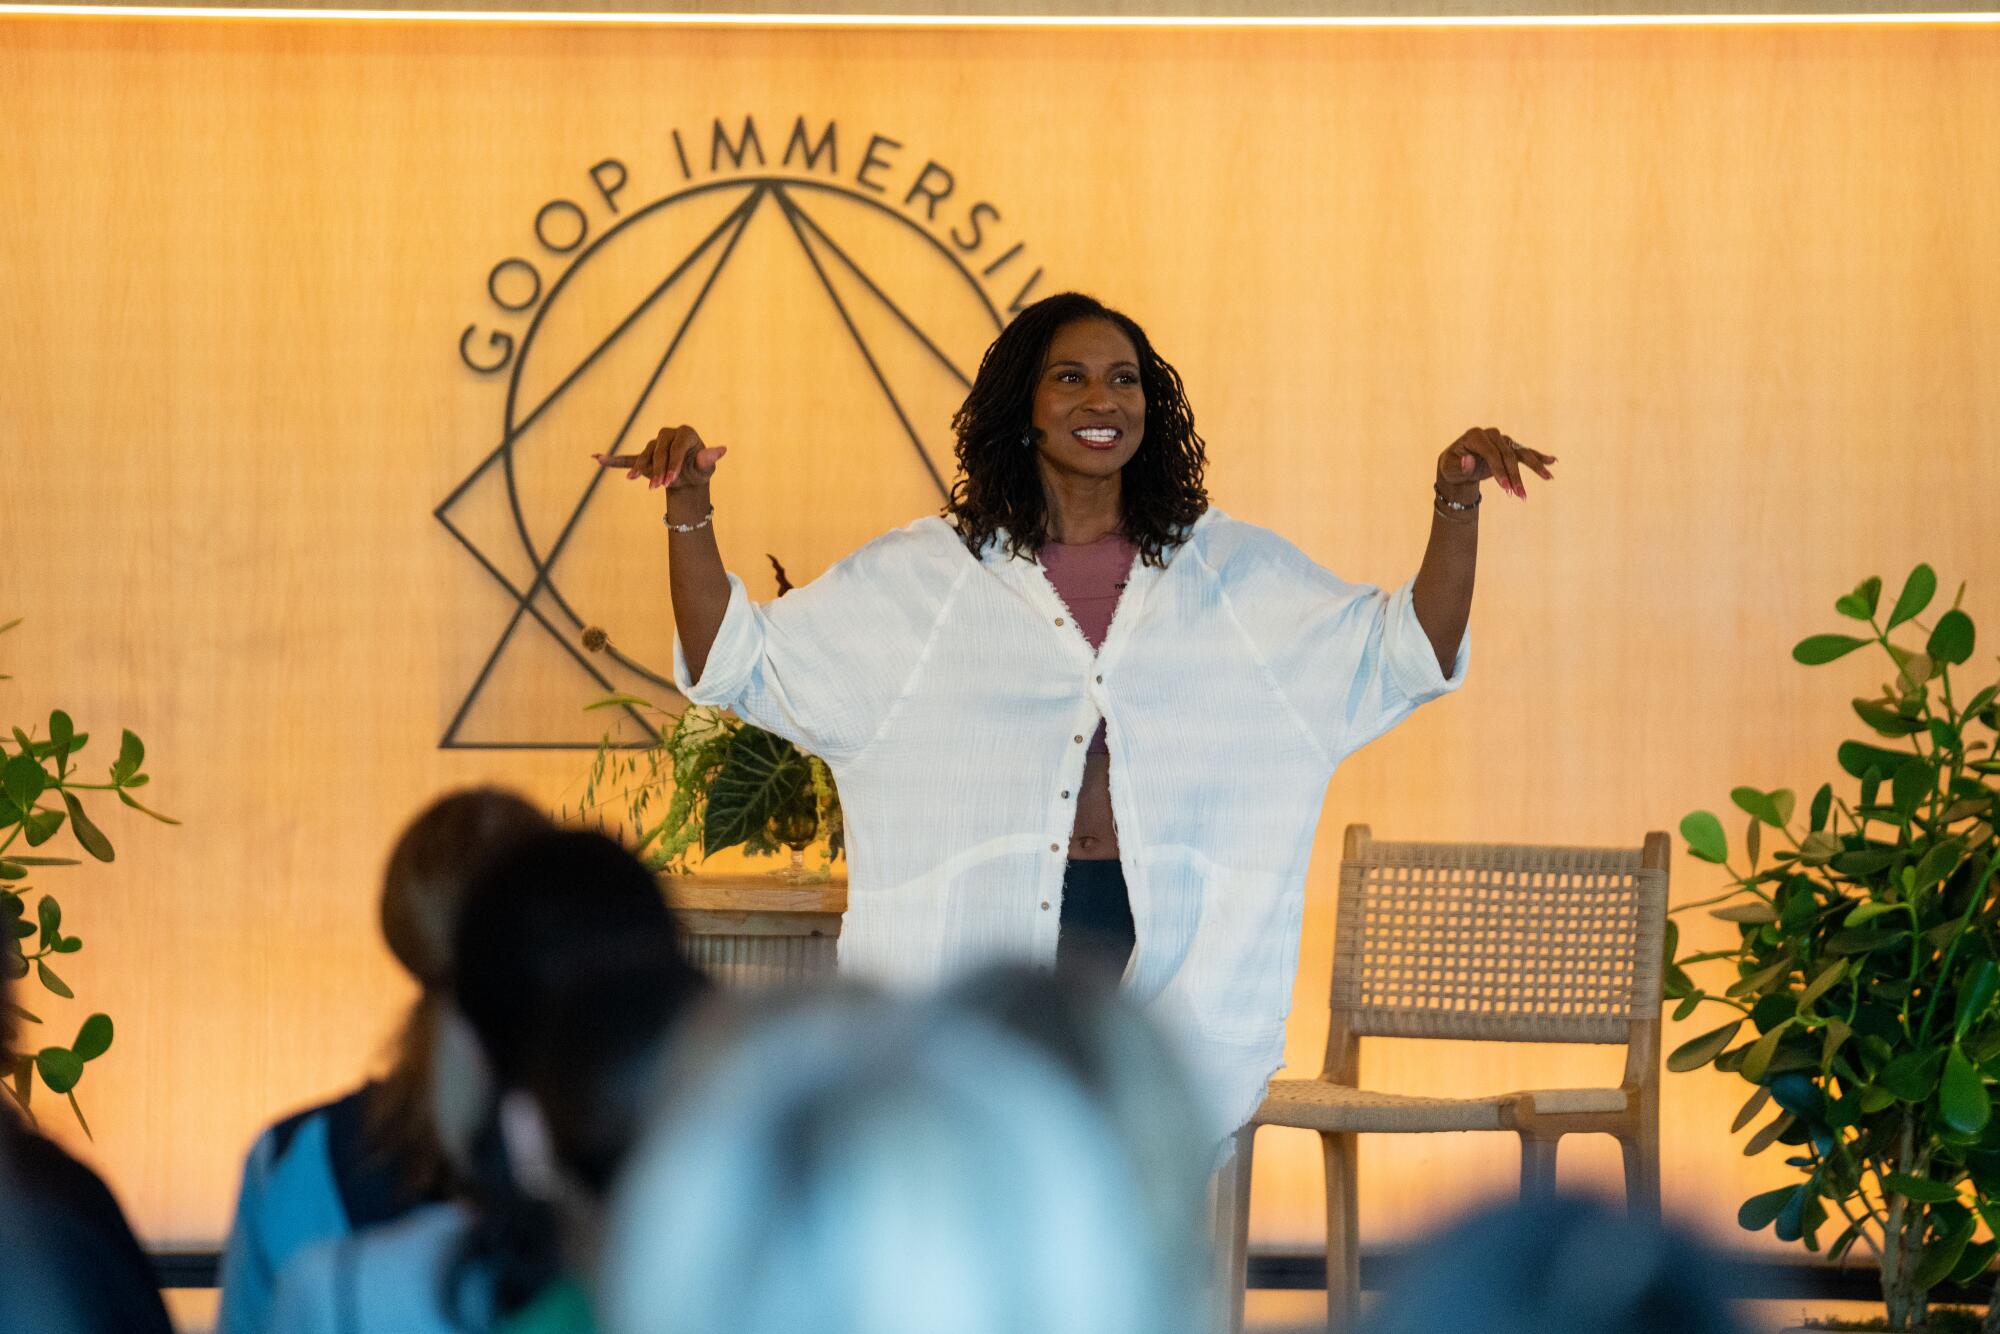 Koya Webb, a yoga teacher and holistic and wellness coach, speaks at the Goop Immersive event in Santa Monica.